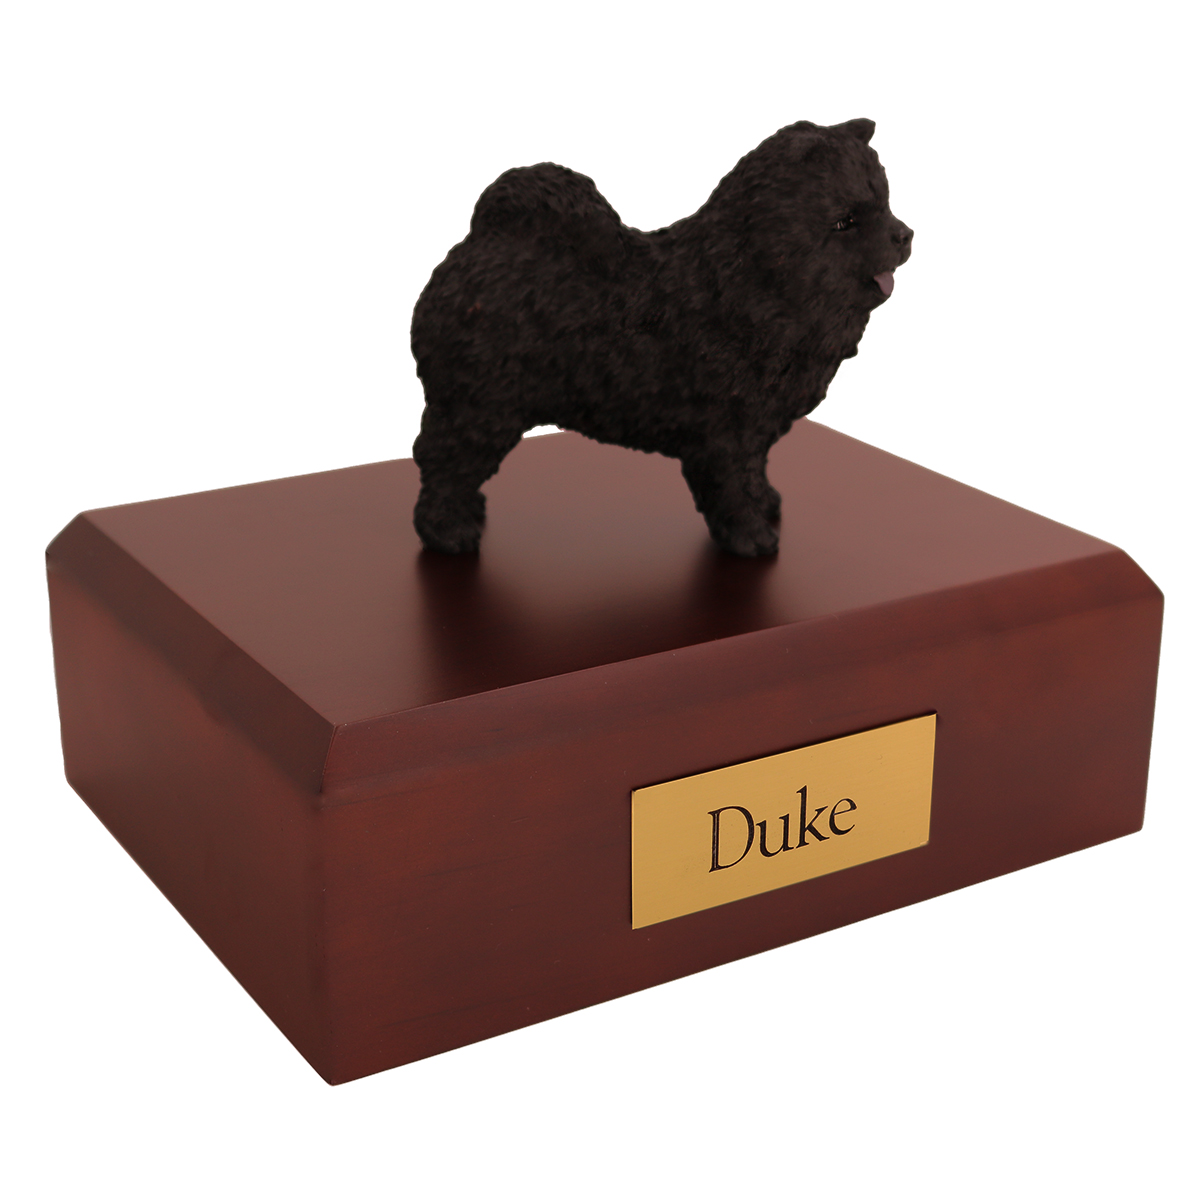 Dog, Chow, Black - Figurine Urn